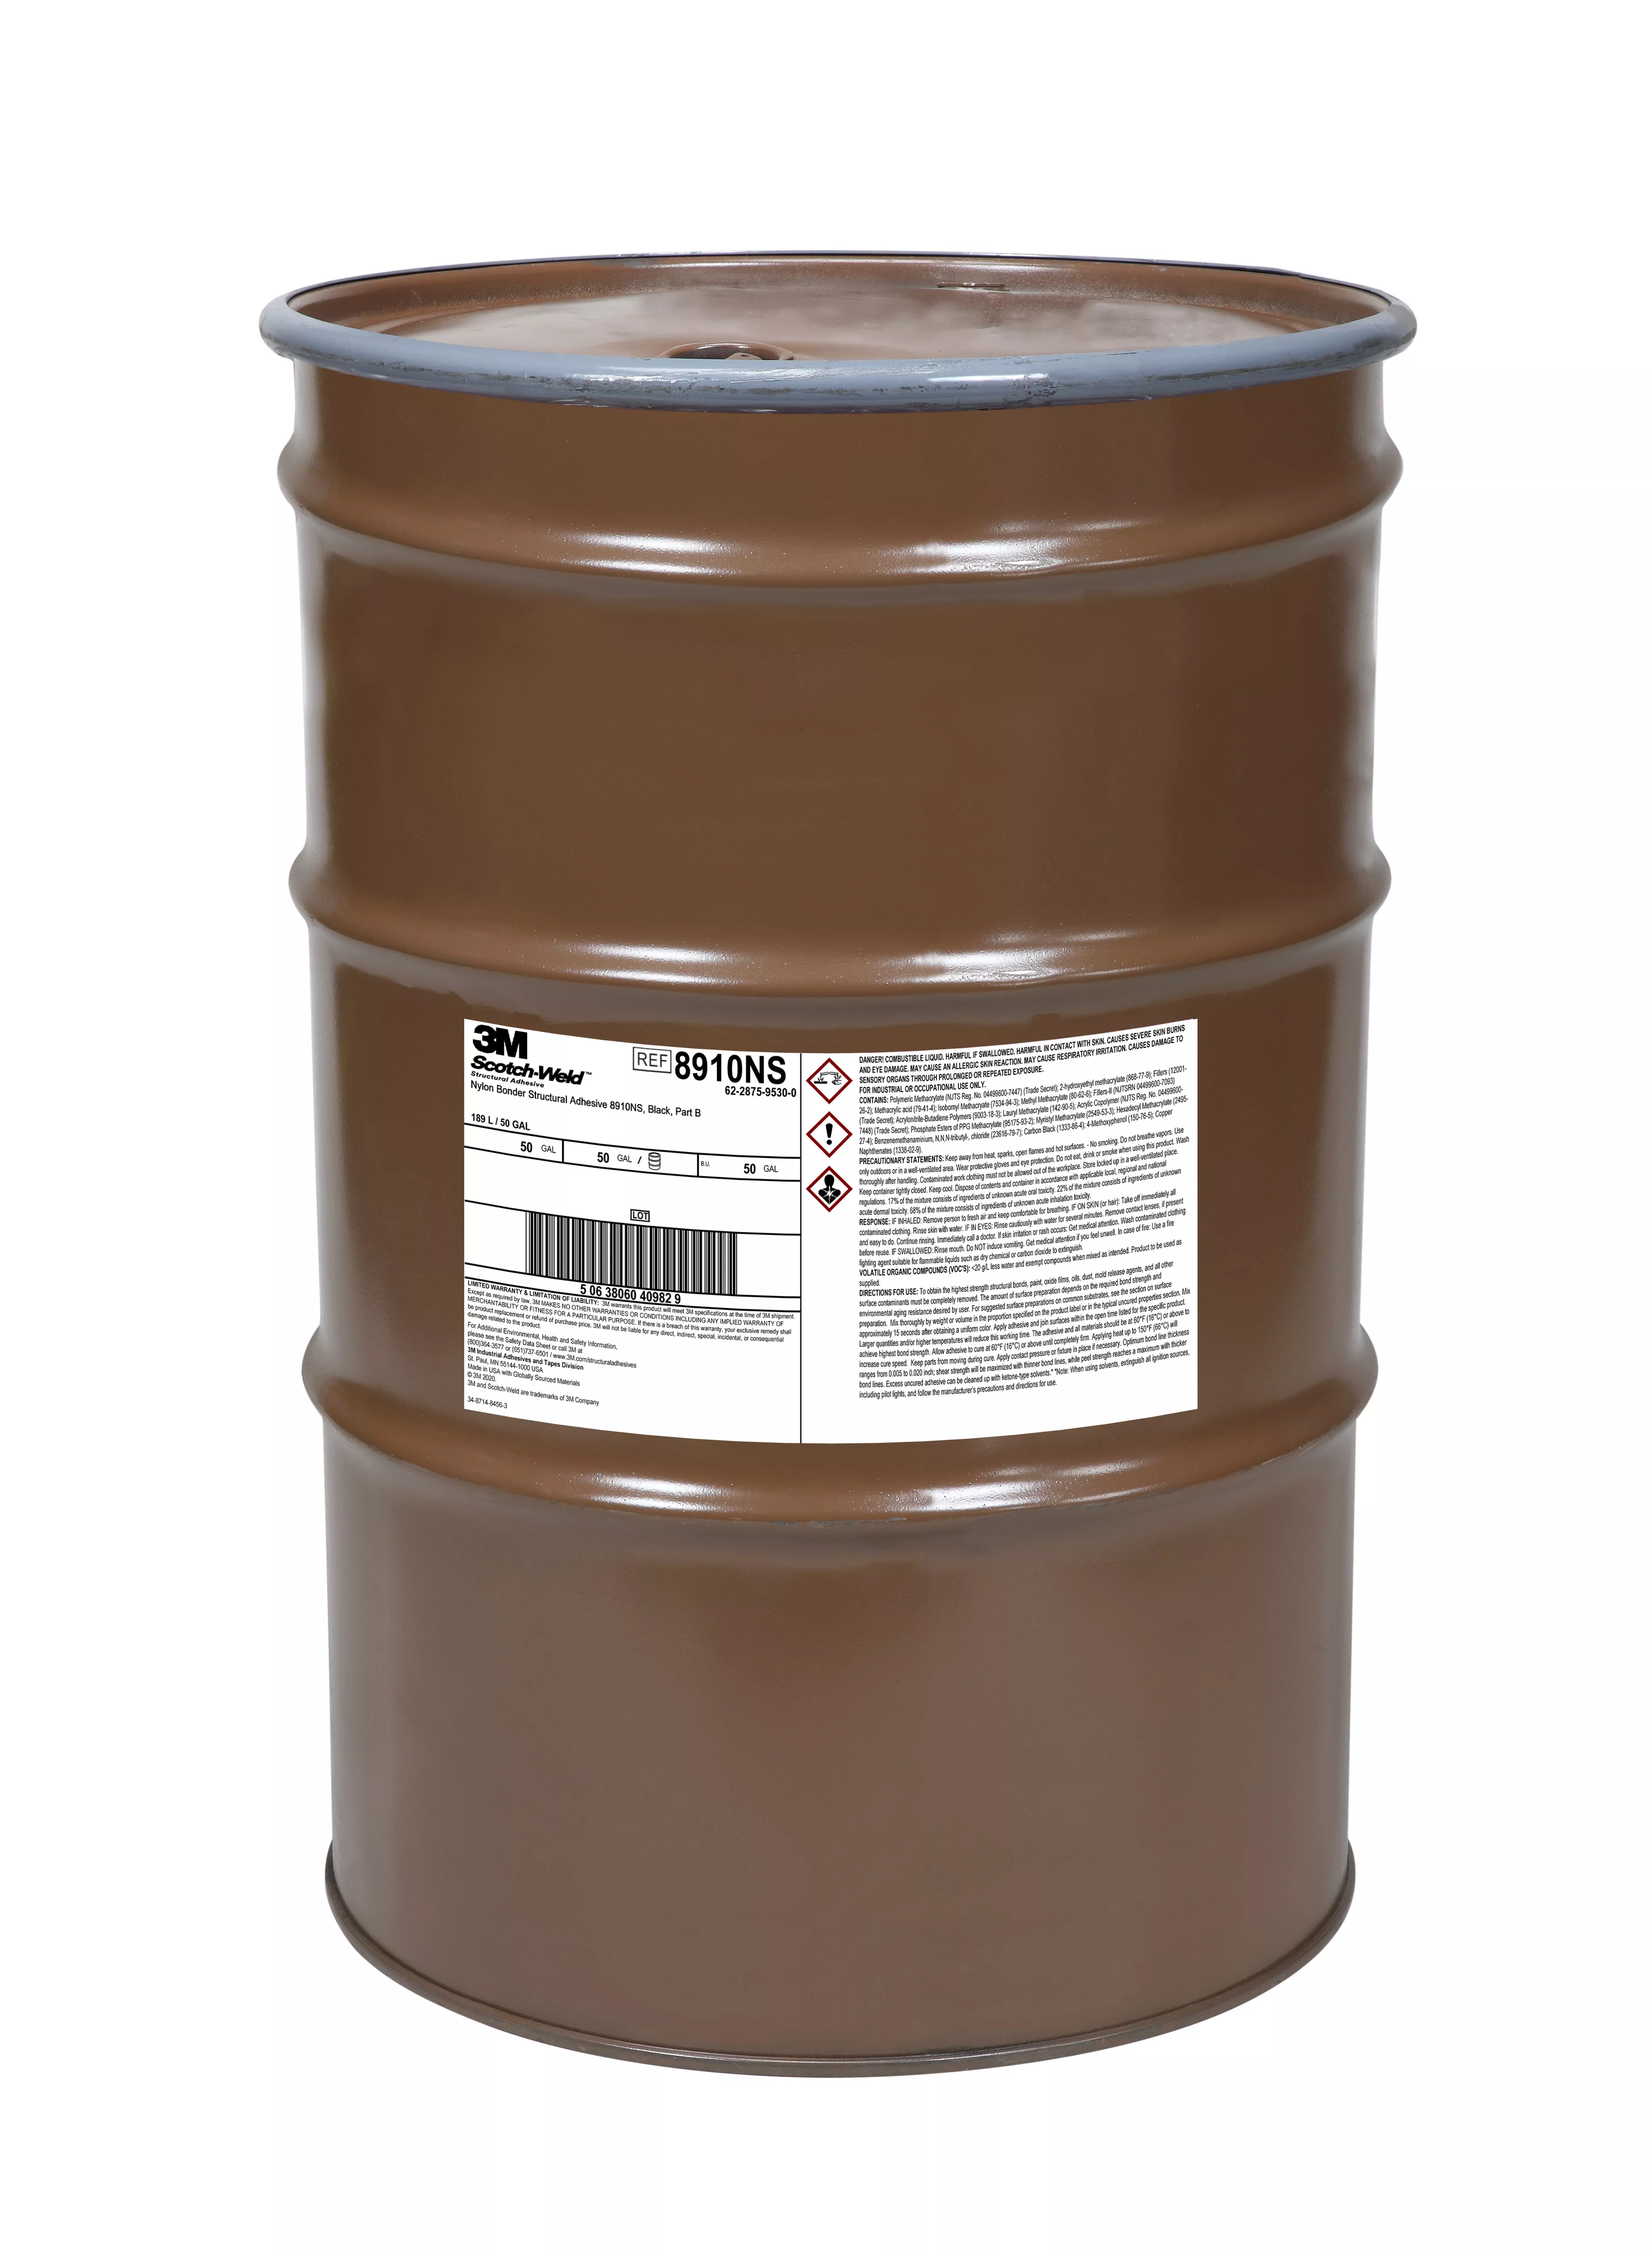 3M™ Scotch-Weld™ Nylon Bonder Structural Adhesive 8910NS, Black, Part B,
55 Gallon (50 Gallon Net), Drum